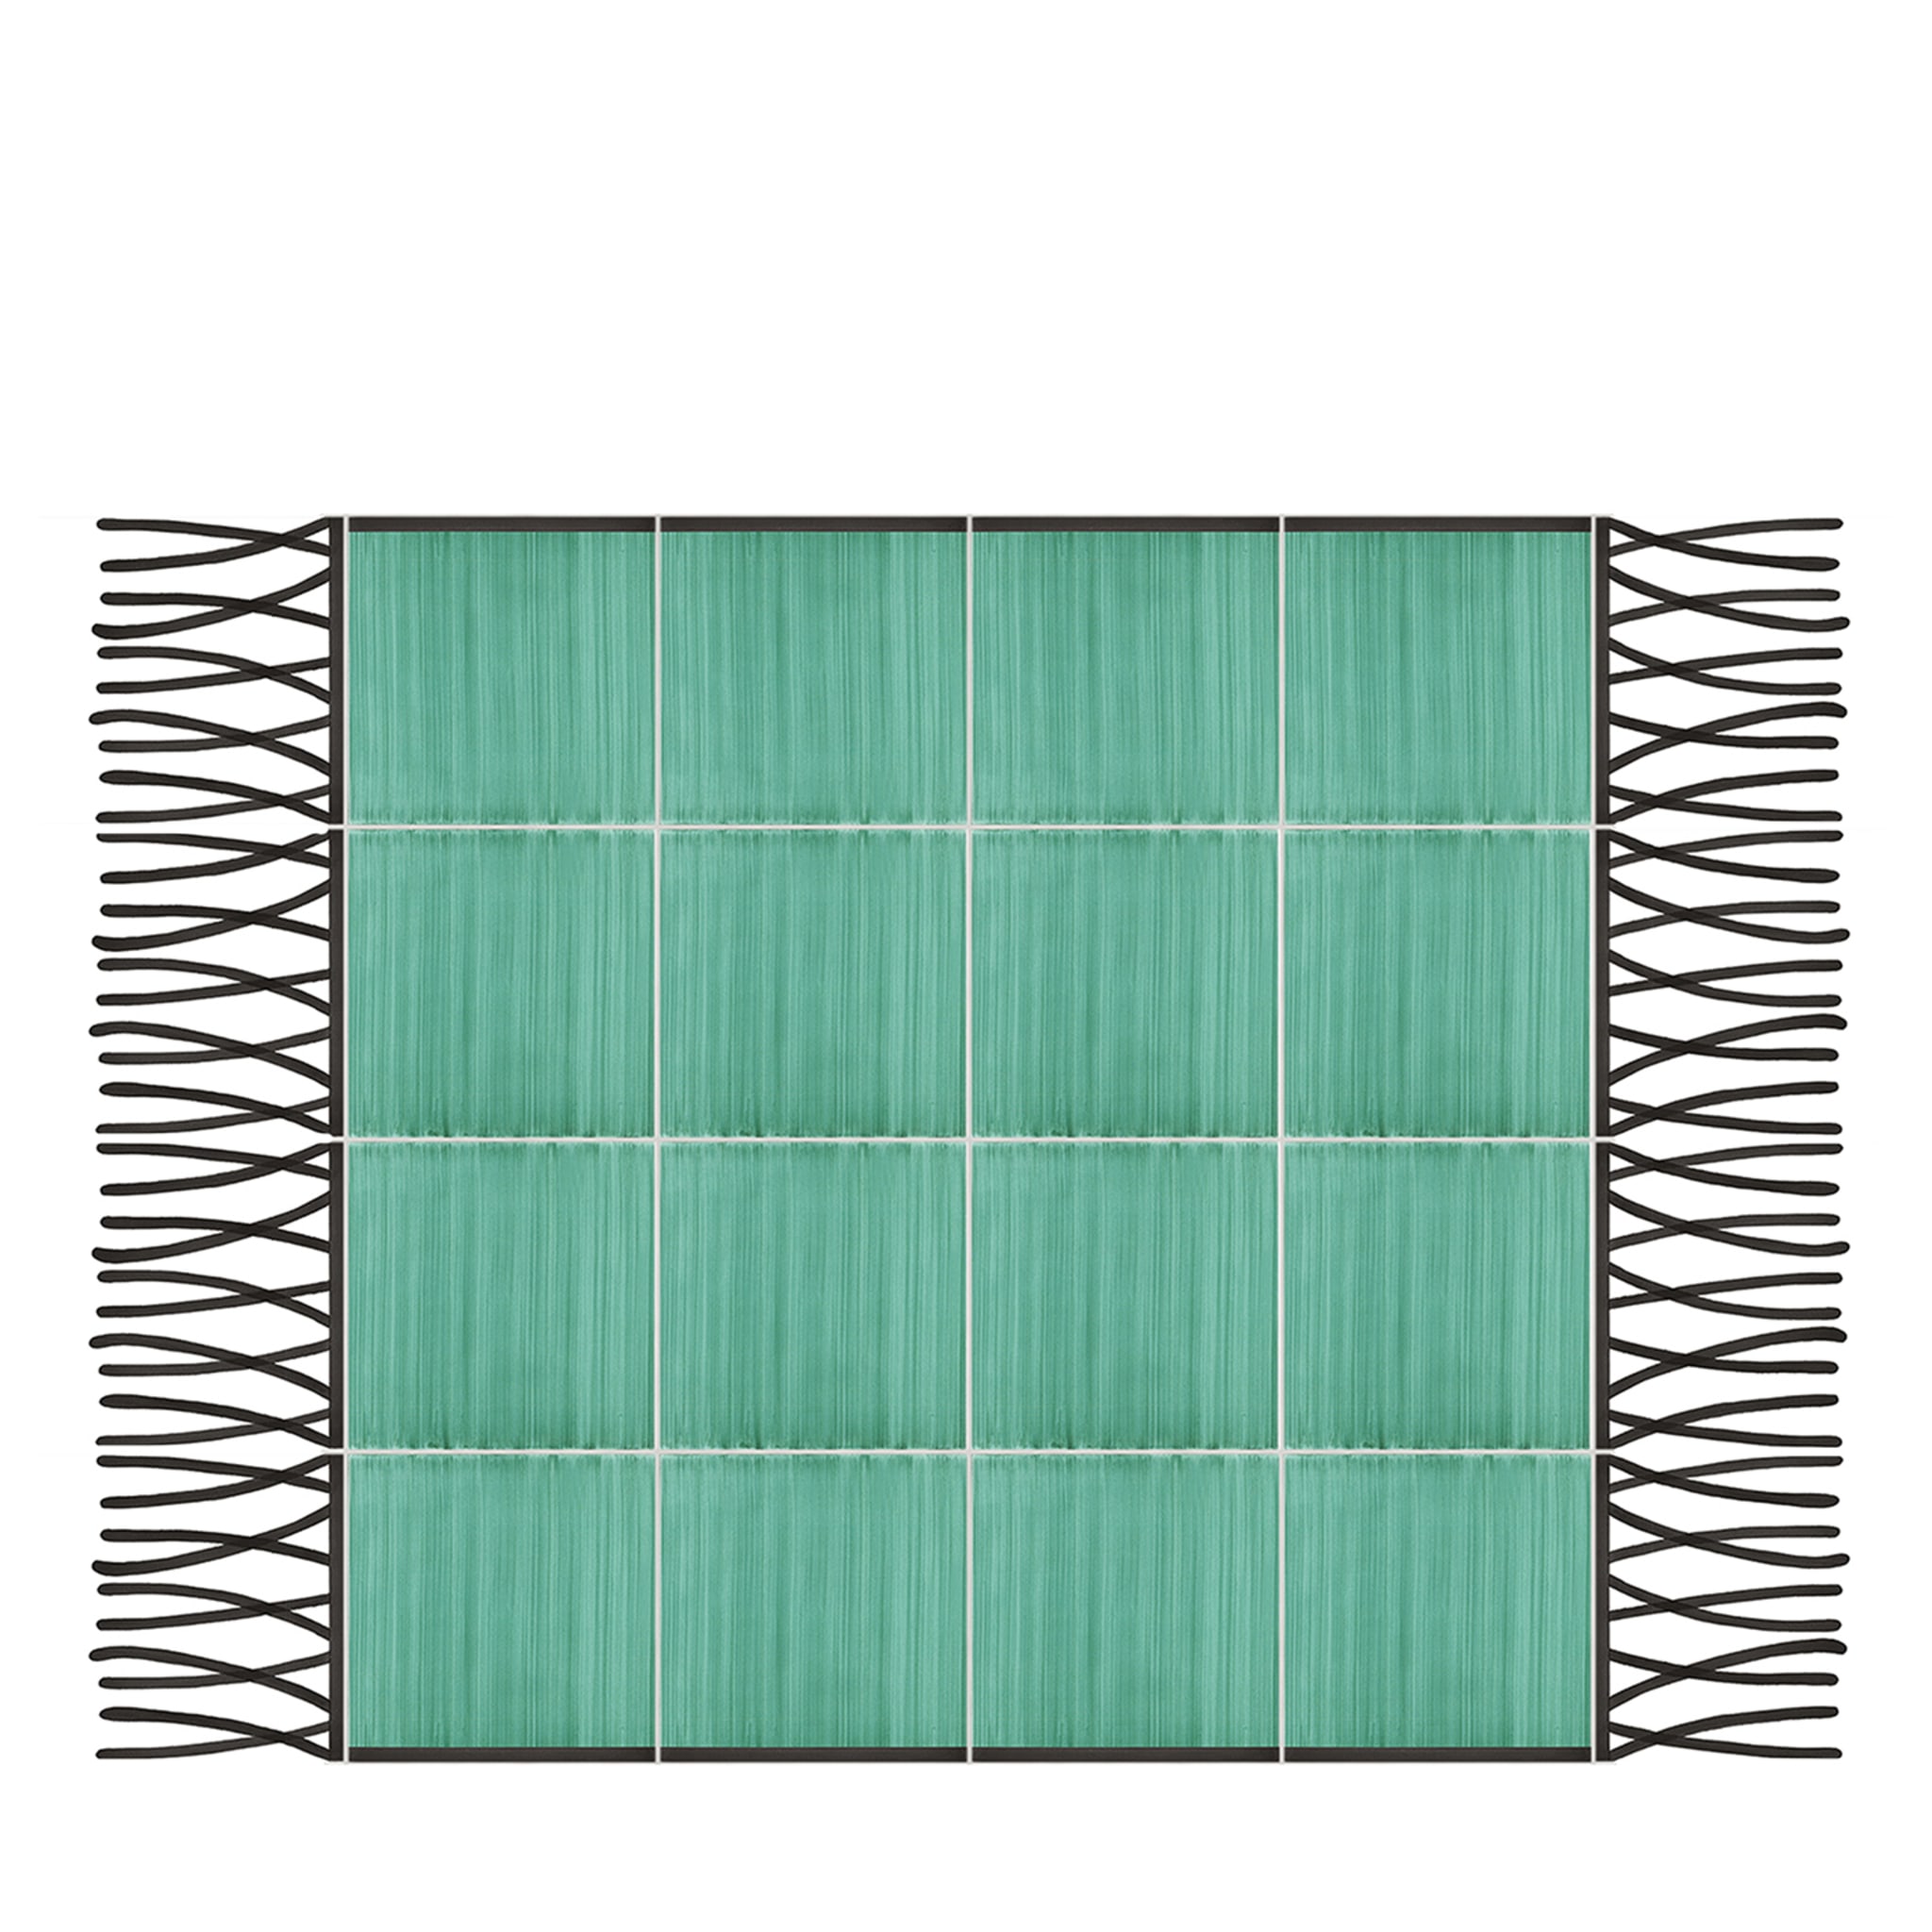 Carpet Total Green Ceramic Composition by Giuliano Andrea dell’Uva 120 X 80 with black border - Main view